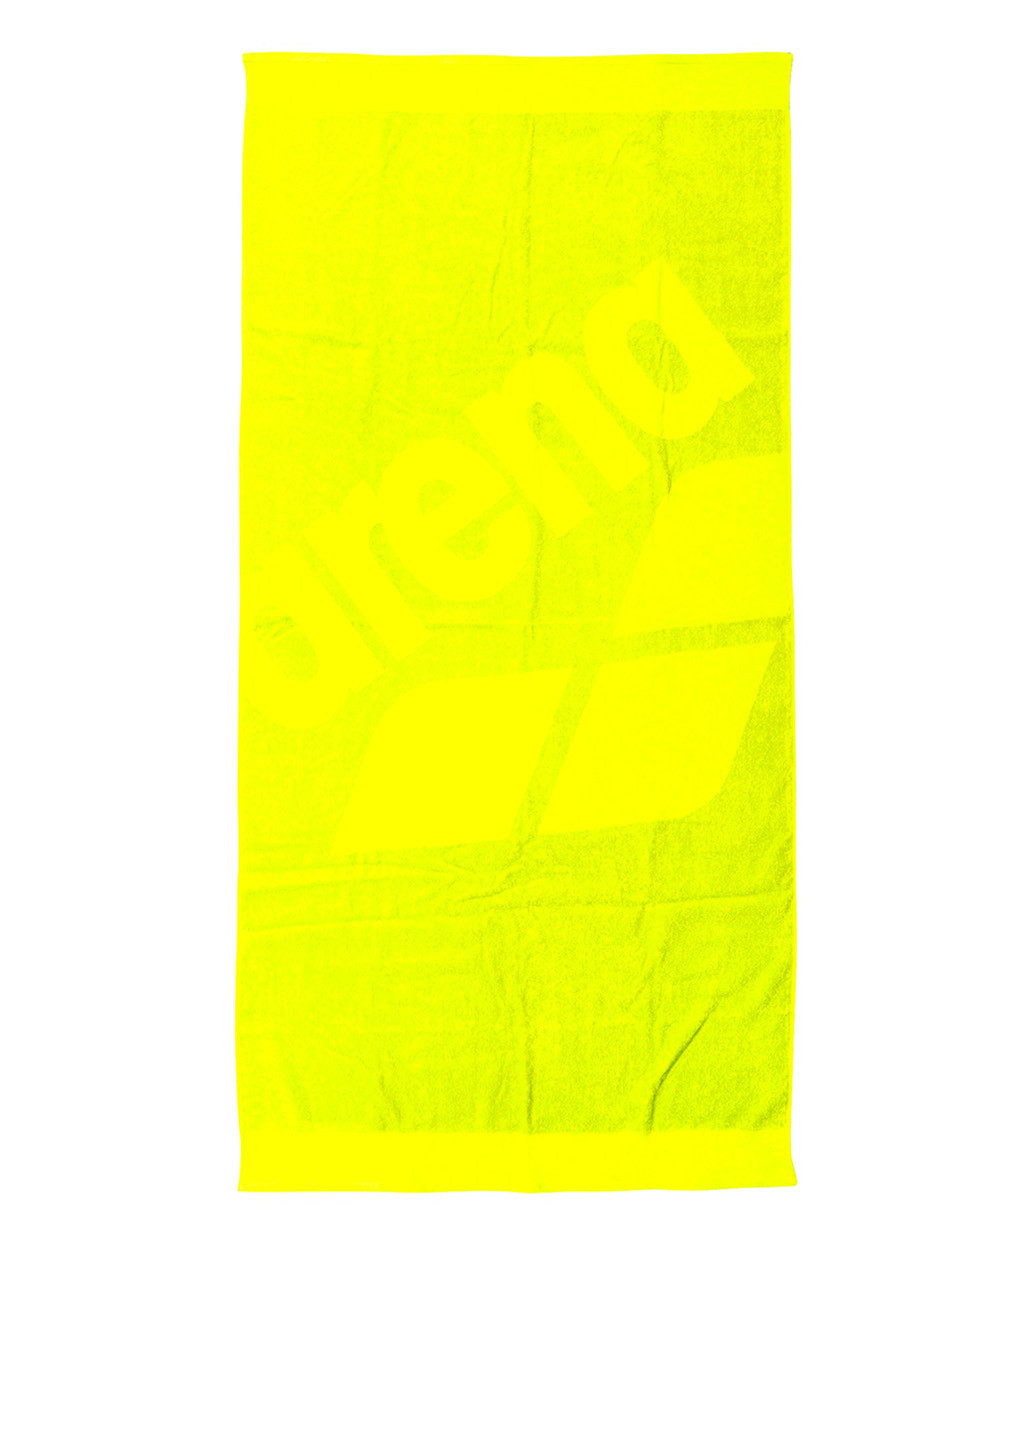 Arena полотенце логотип кислотно-жёлтый производство - Турция